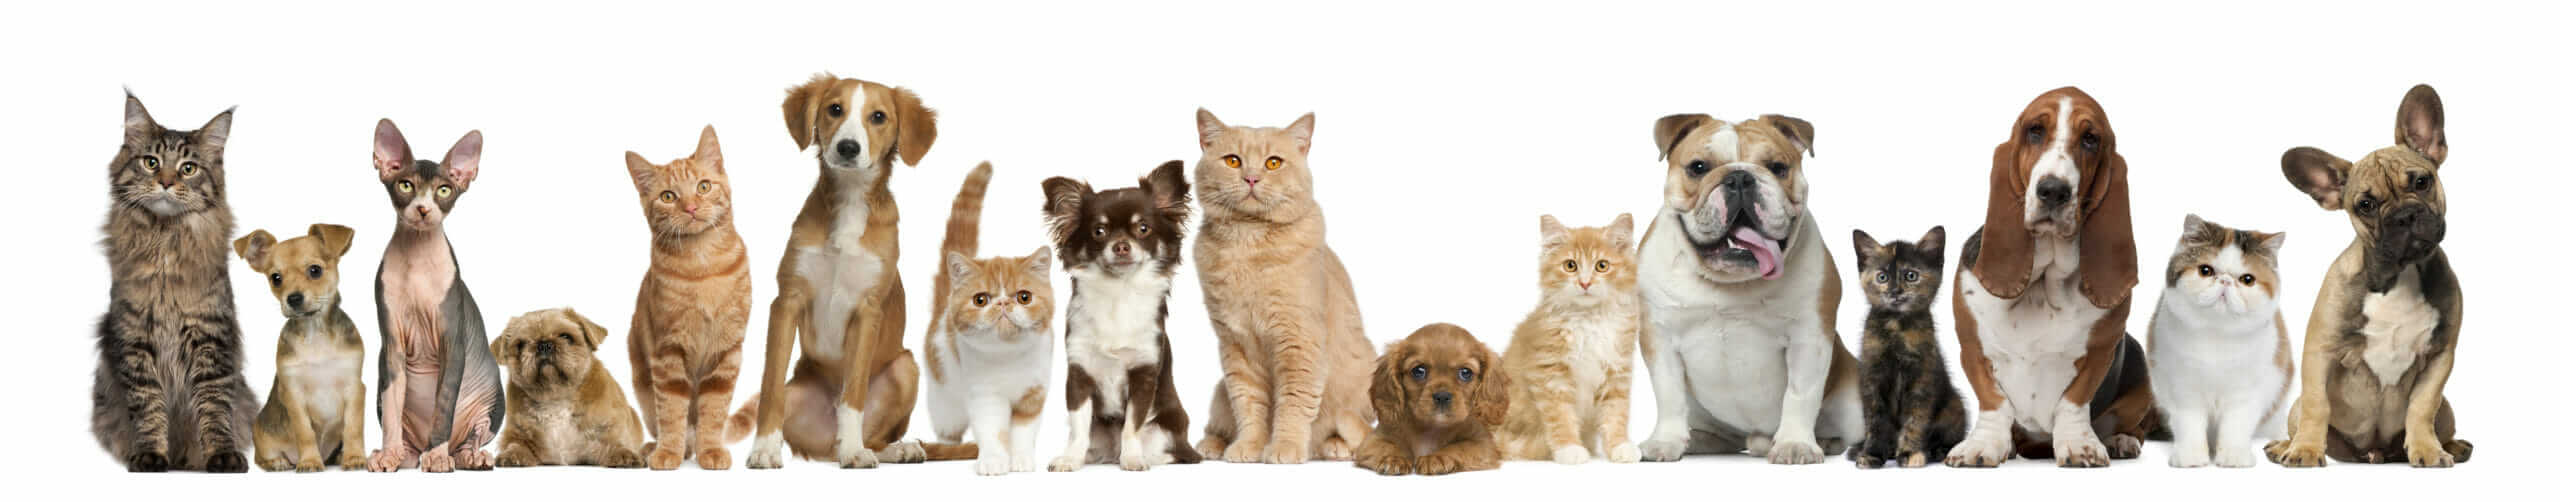 Pets Family Header Image